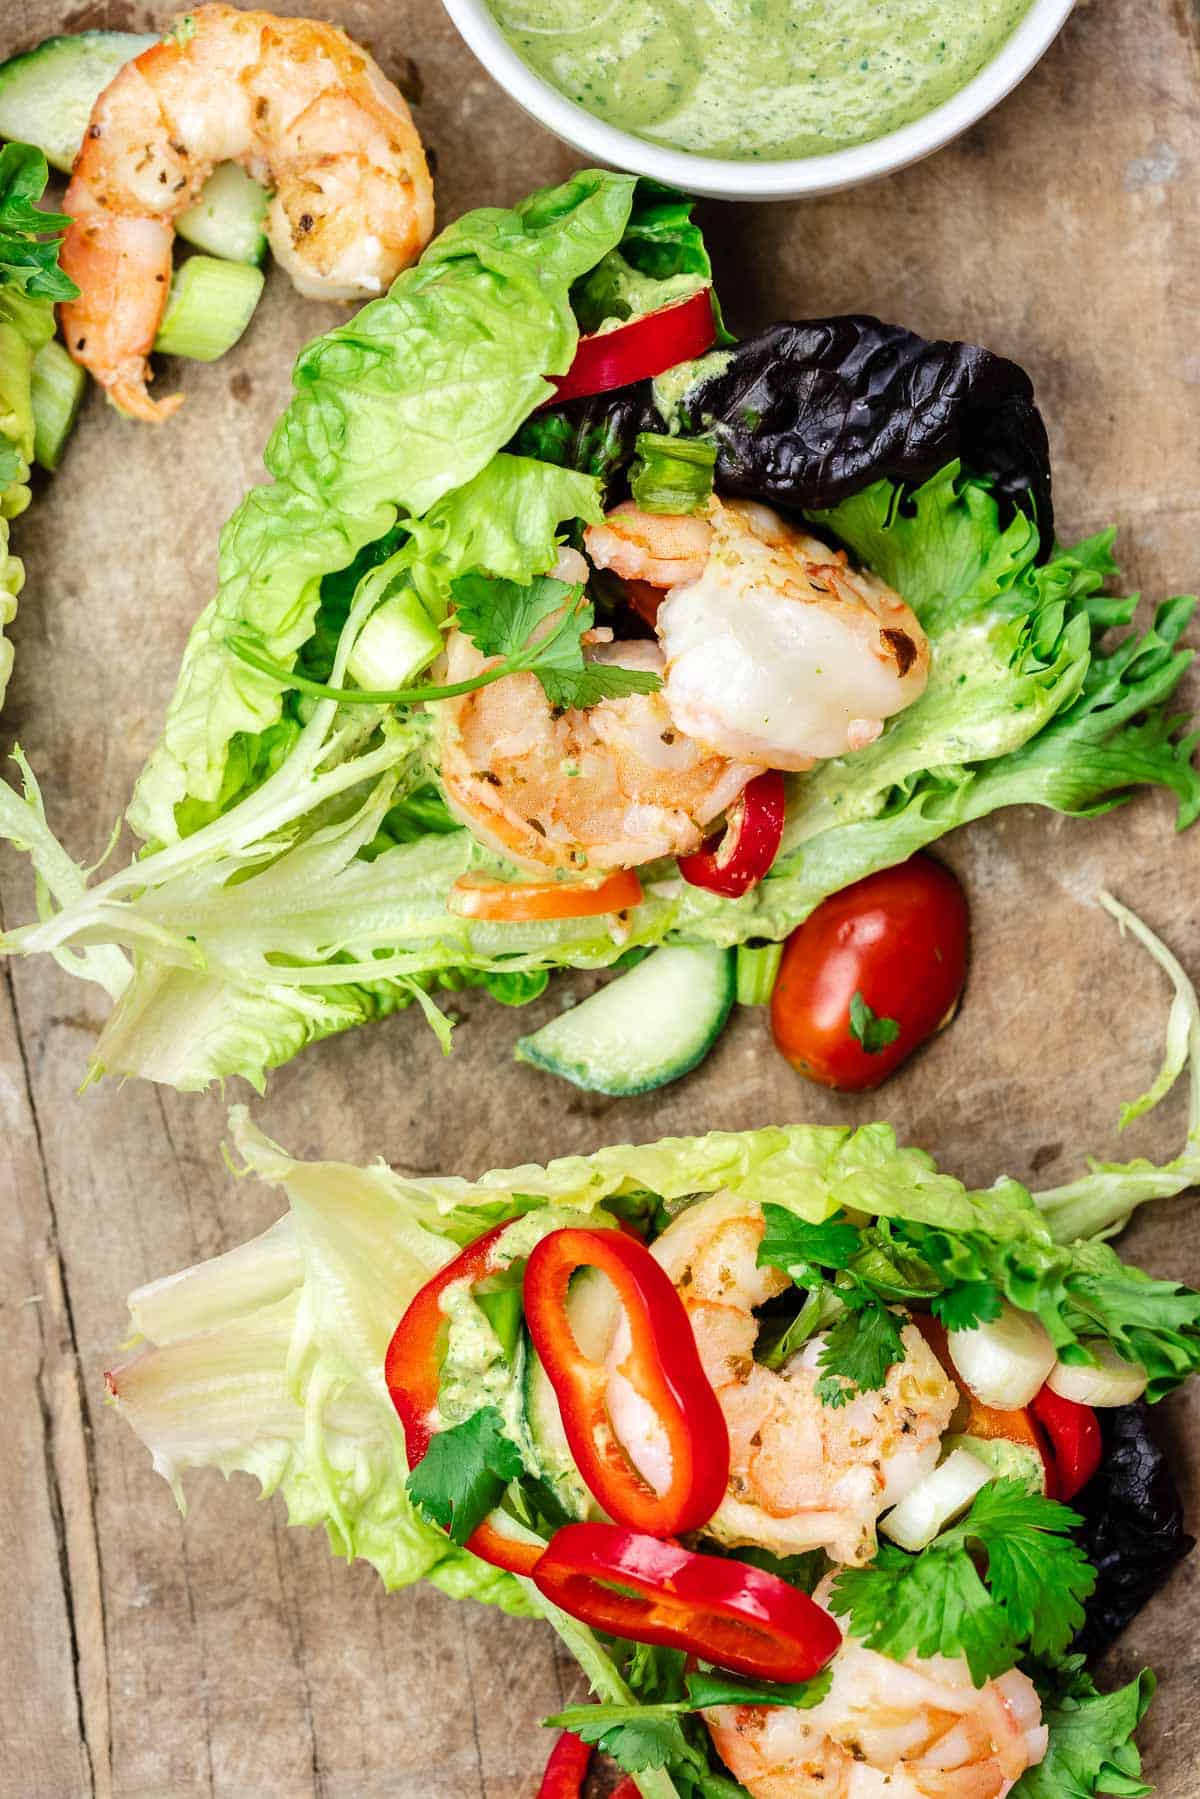 loaded lettuce wraps with shrimp, vegetables, herbs, and vegan green goddess dressing on the side